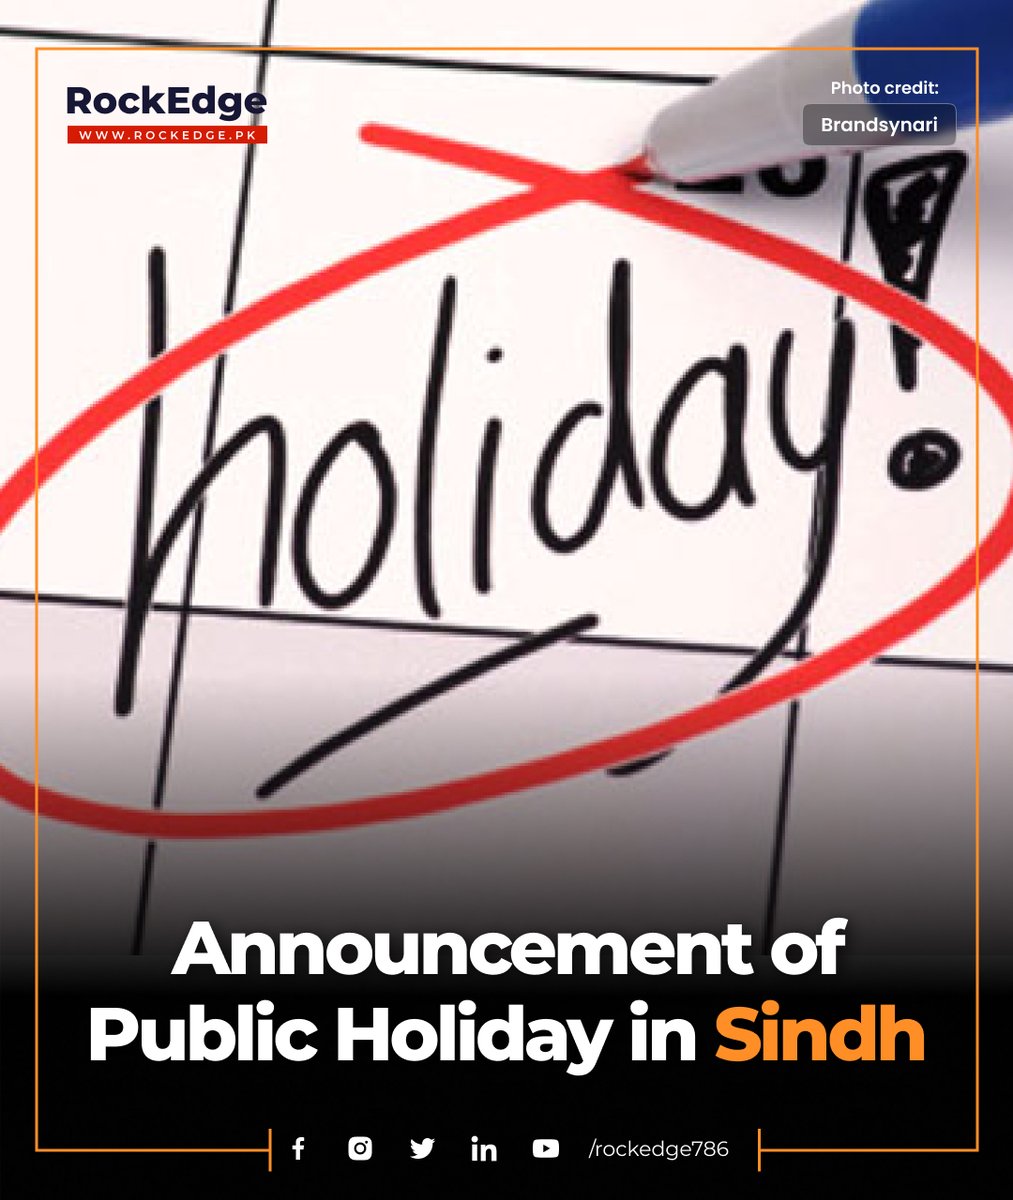 On Quaid-e-Azam Day and Christmas, the caretaker administration of Sindh has proclaimed December 25th as a public holiday.

#rockedge #rockedgepk #rockedgenews #rockedgeurdu #LatestNews #latestnewstoday #latestbreakingnews #latestbreakingnewstoday